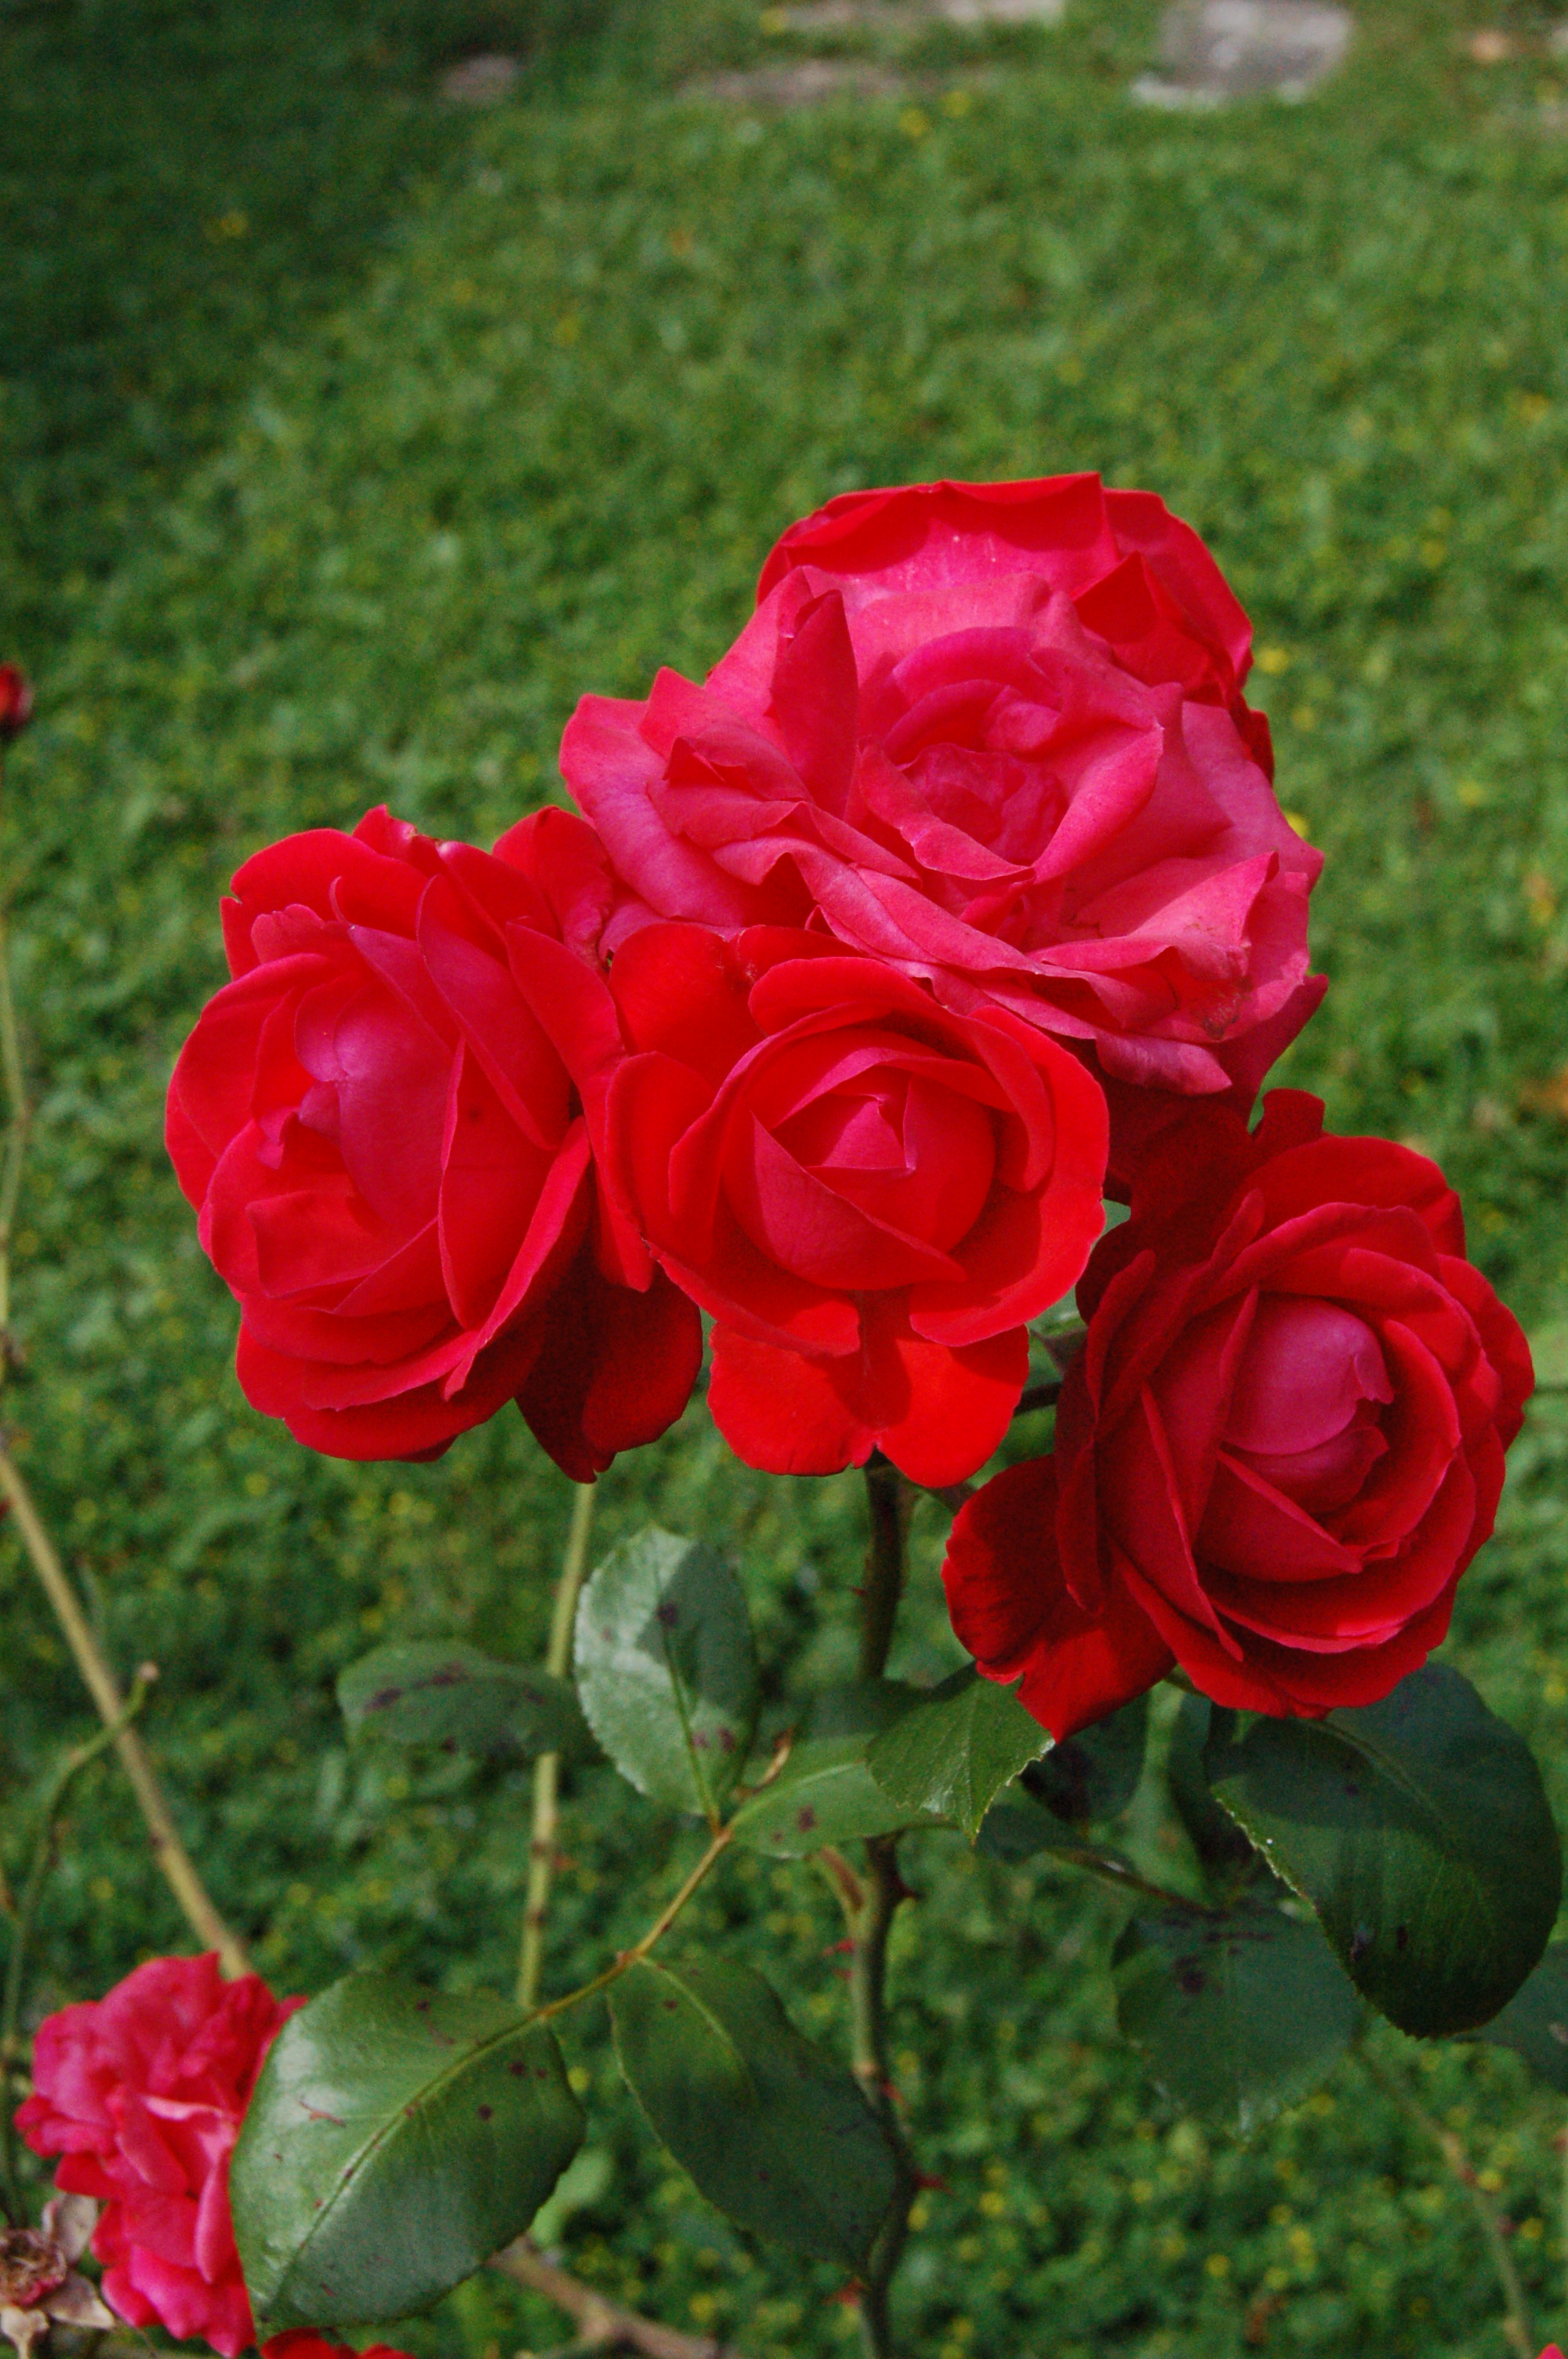 File:Roses rouge.jpg - Wikimedia Commons